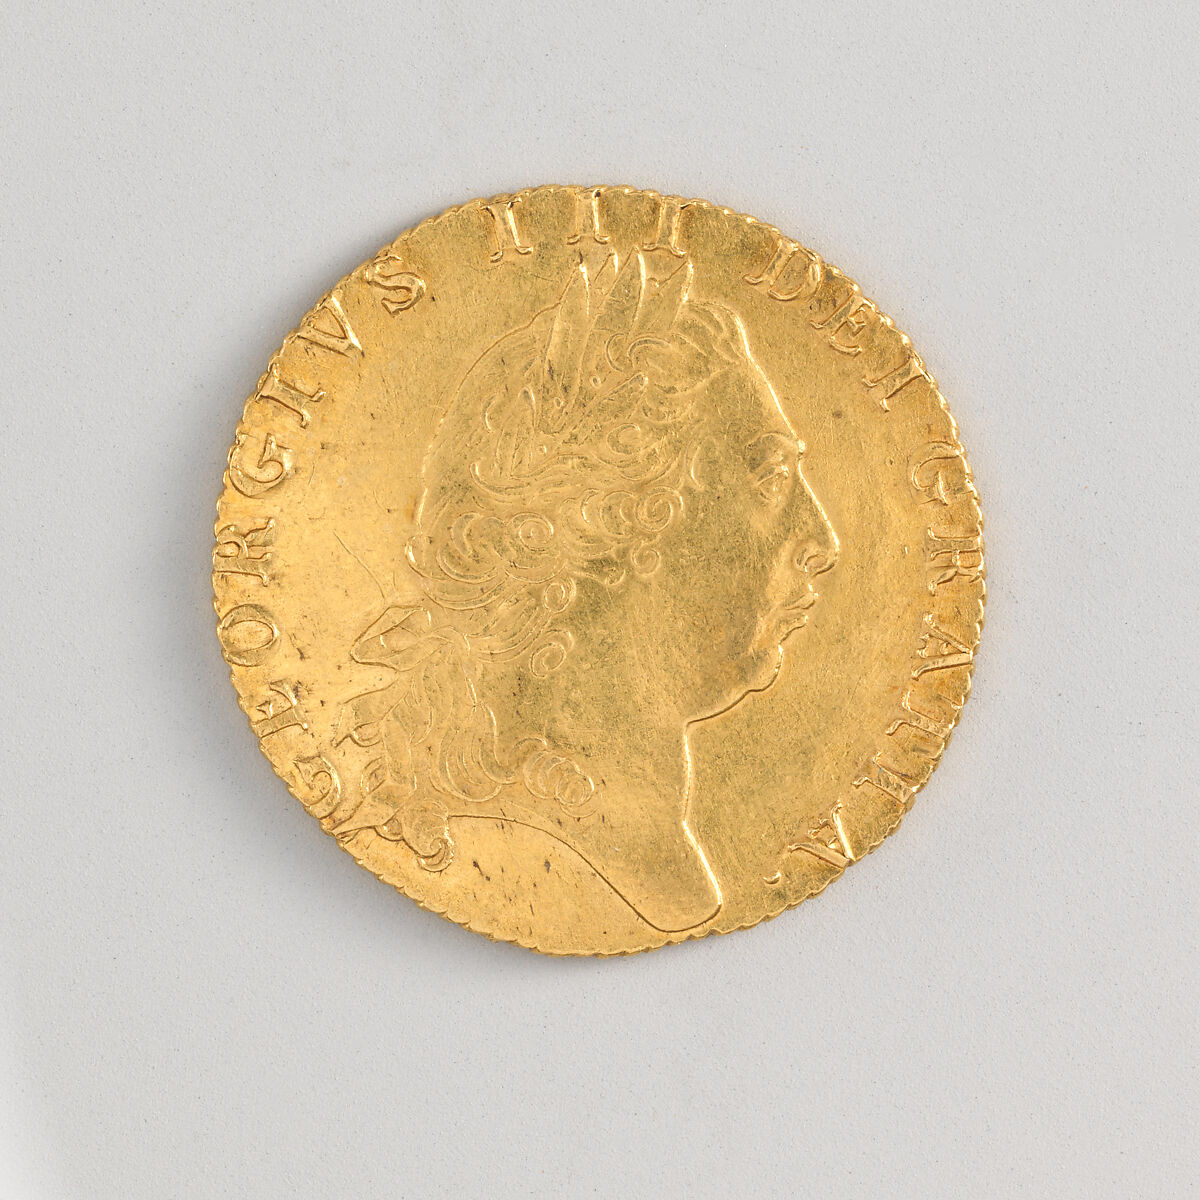 George III guinea, Medalist: Lewis Pingo (1743–1830), Gold, British 